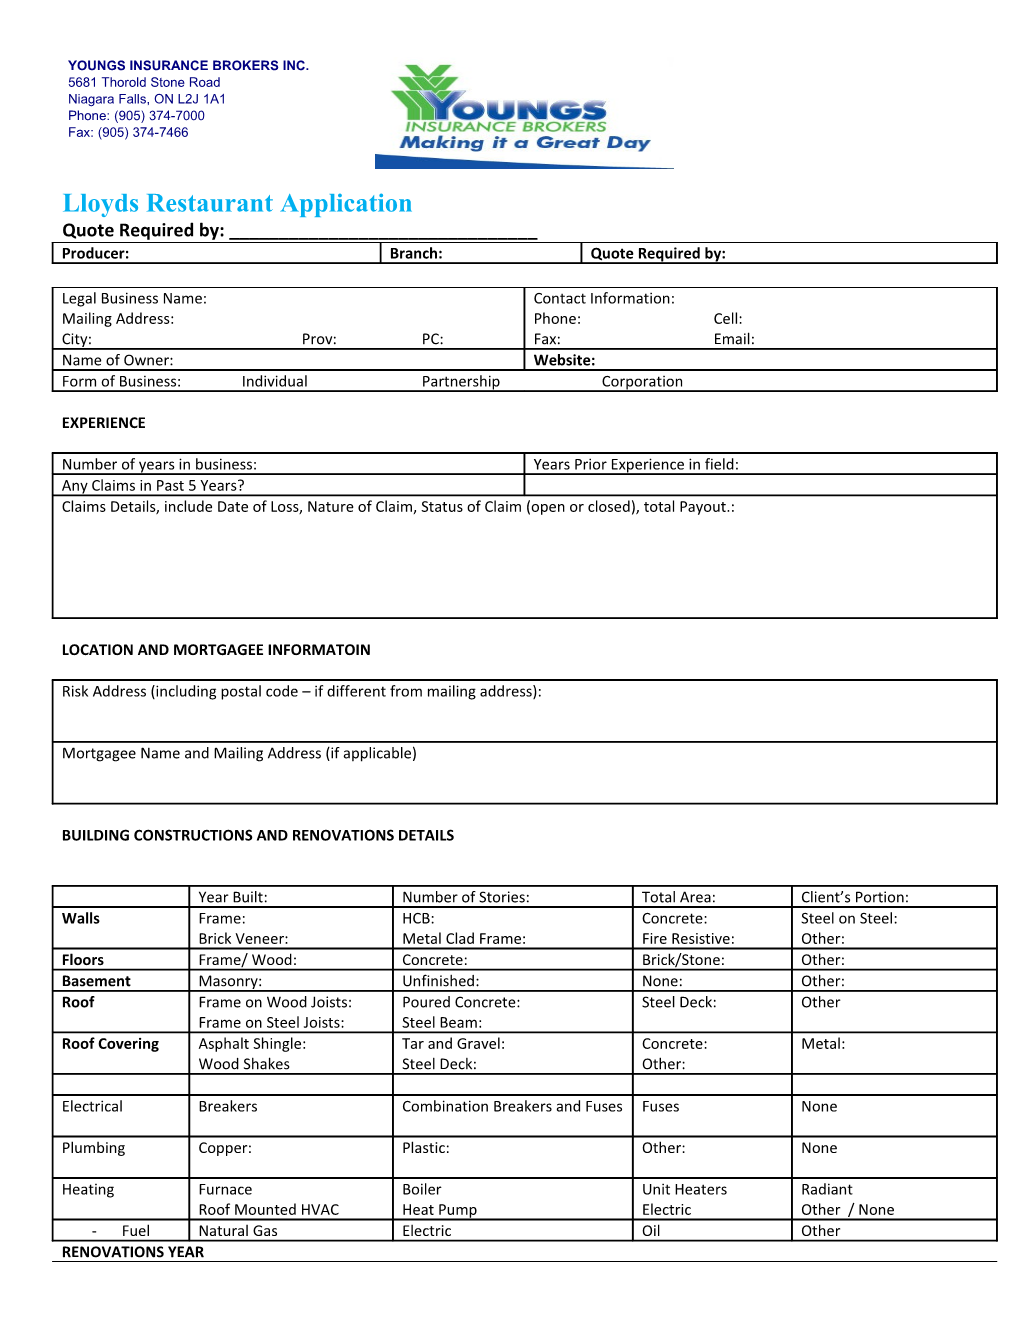 Lloyds Restaurant Application